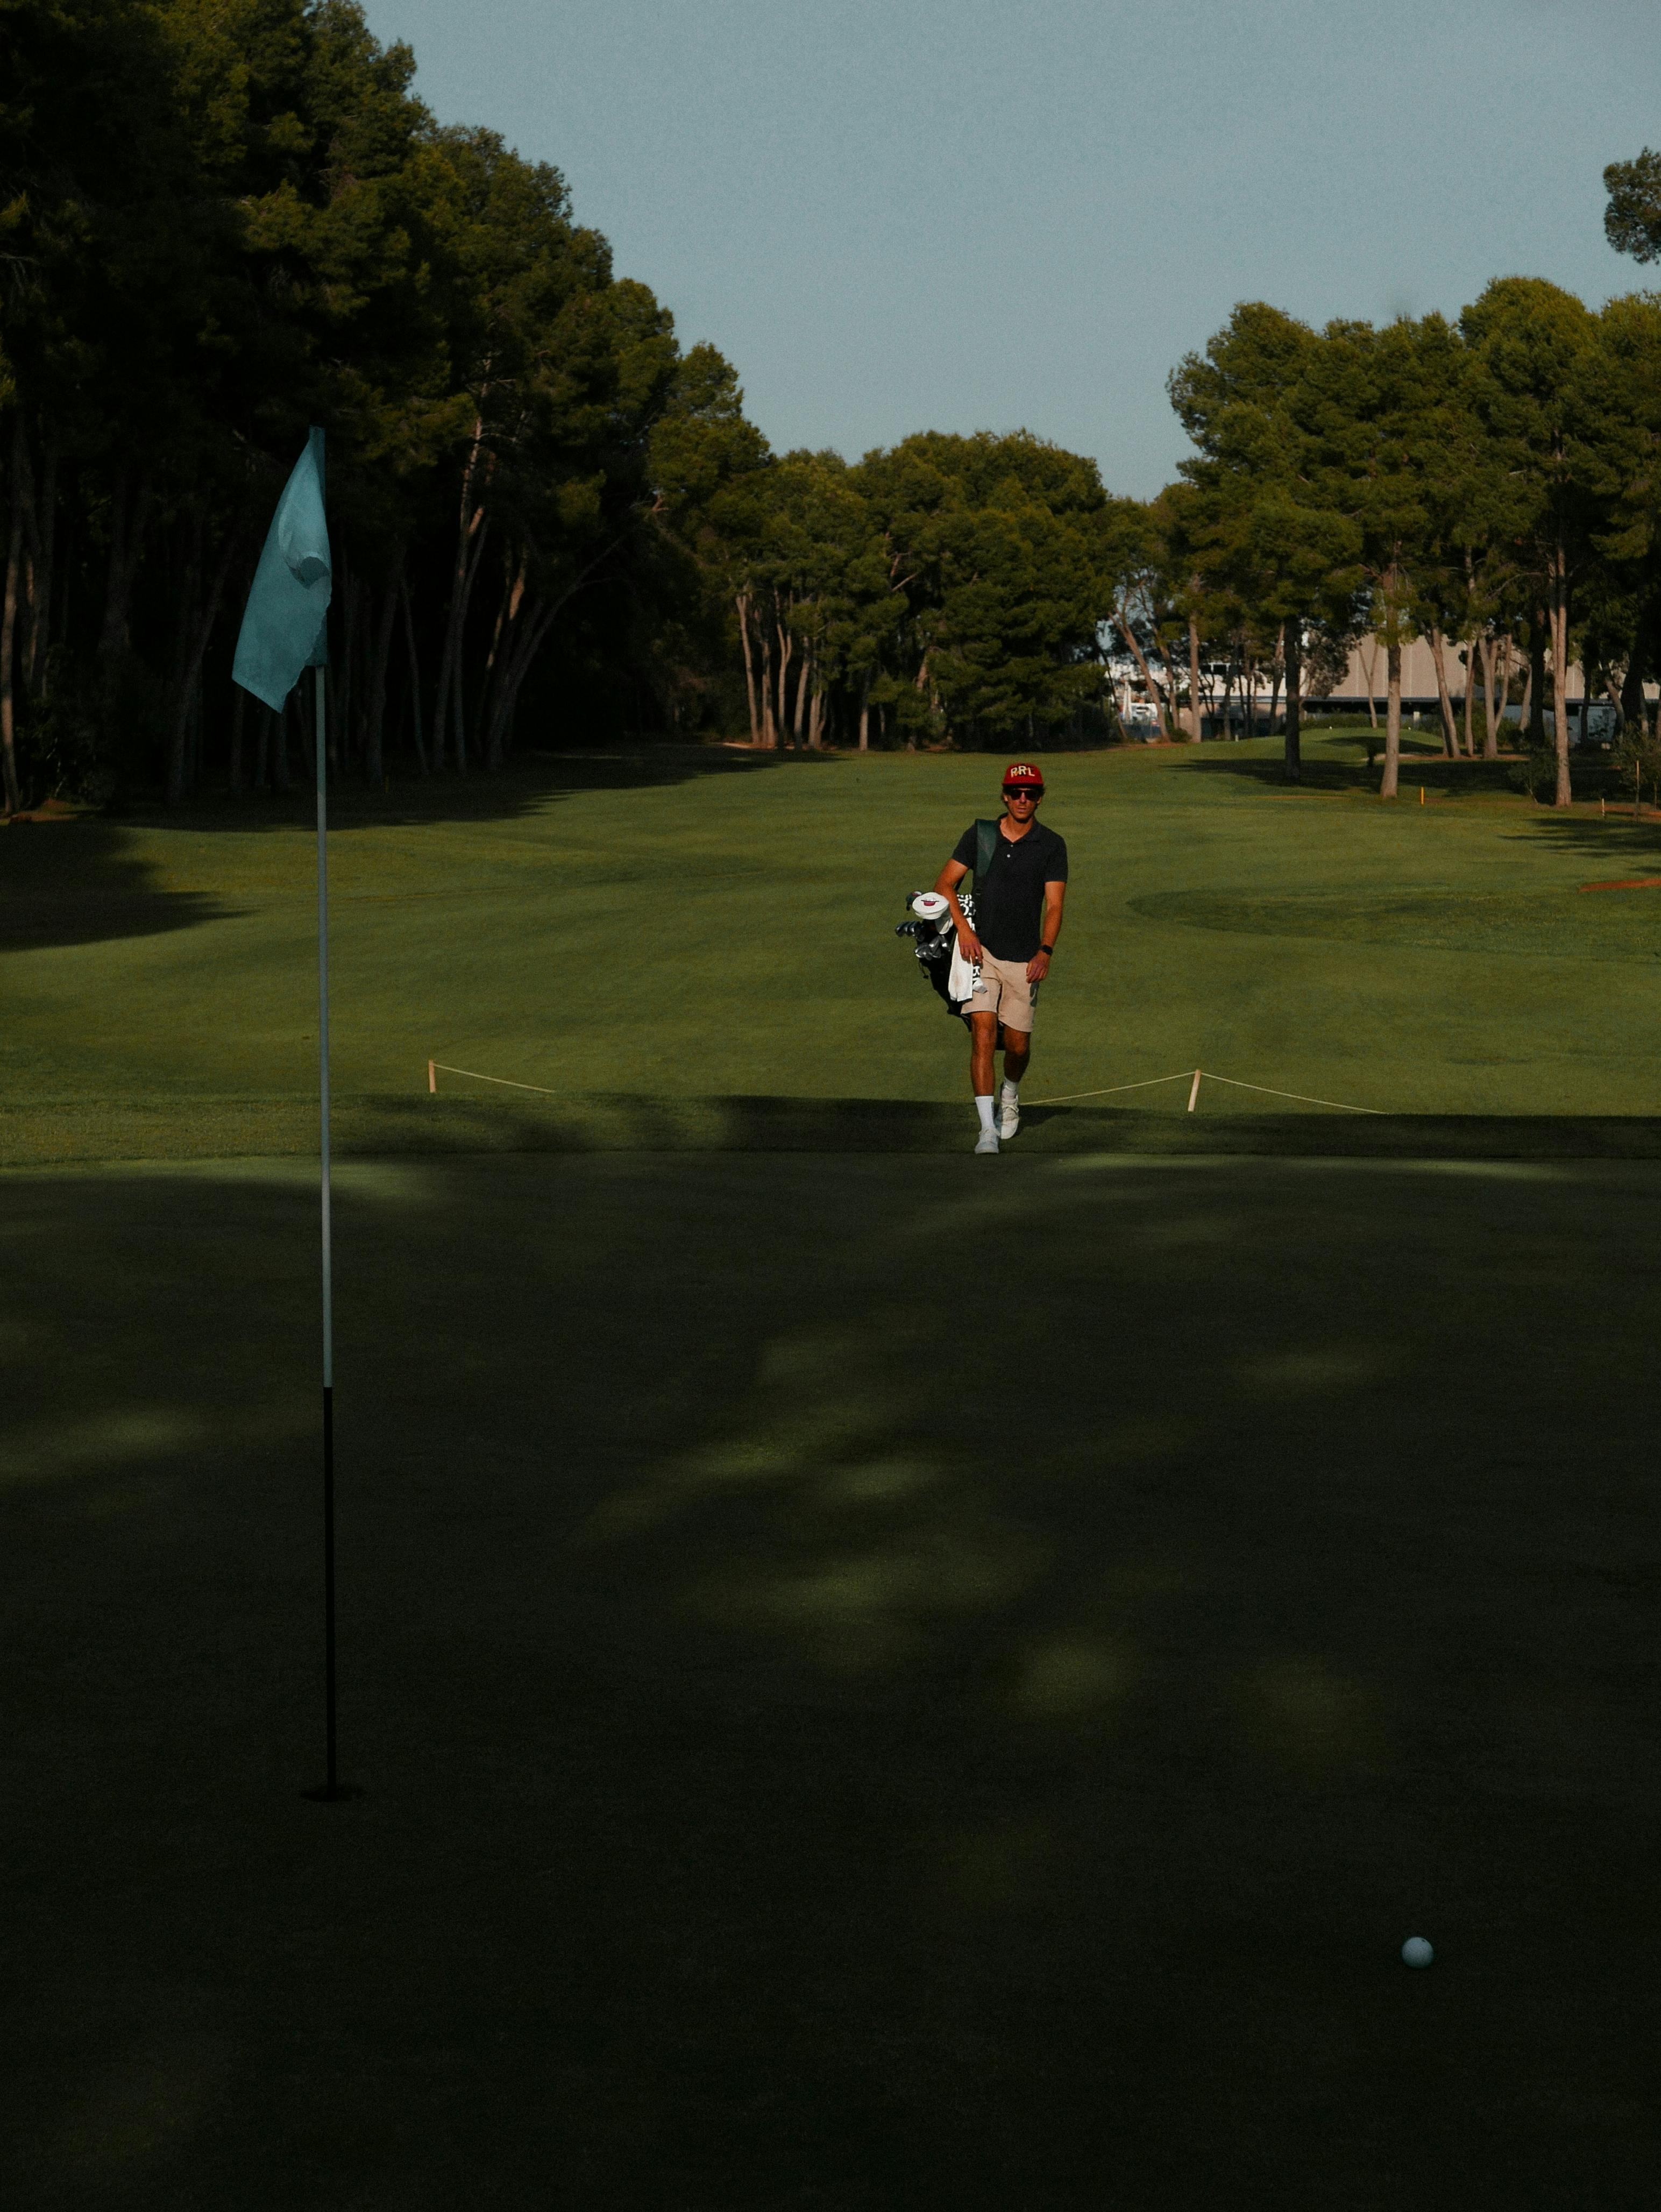 Jorge Abian playing golf